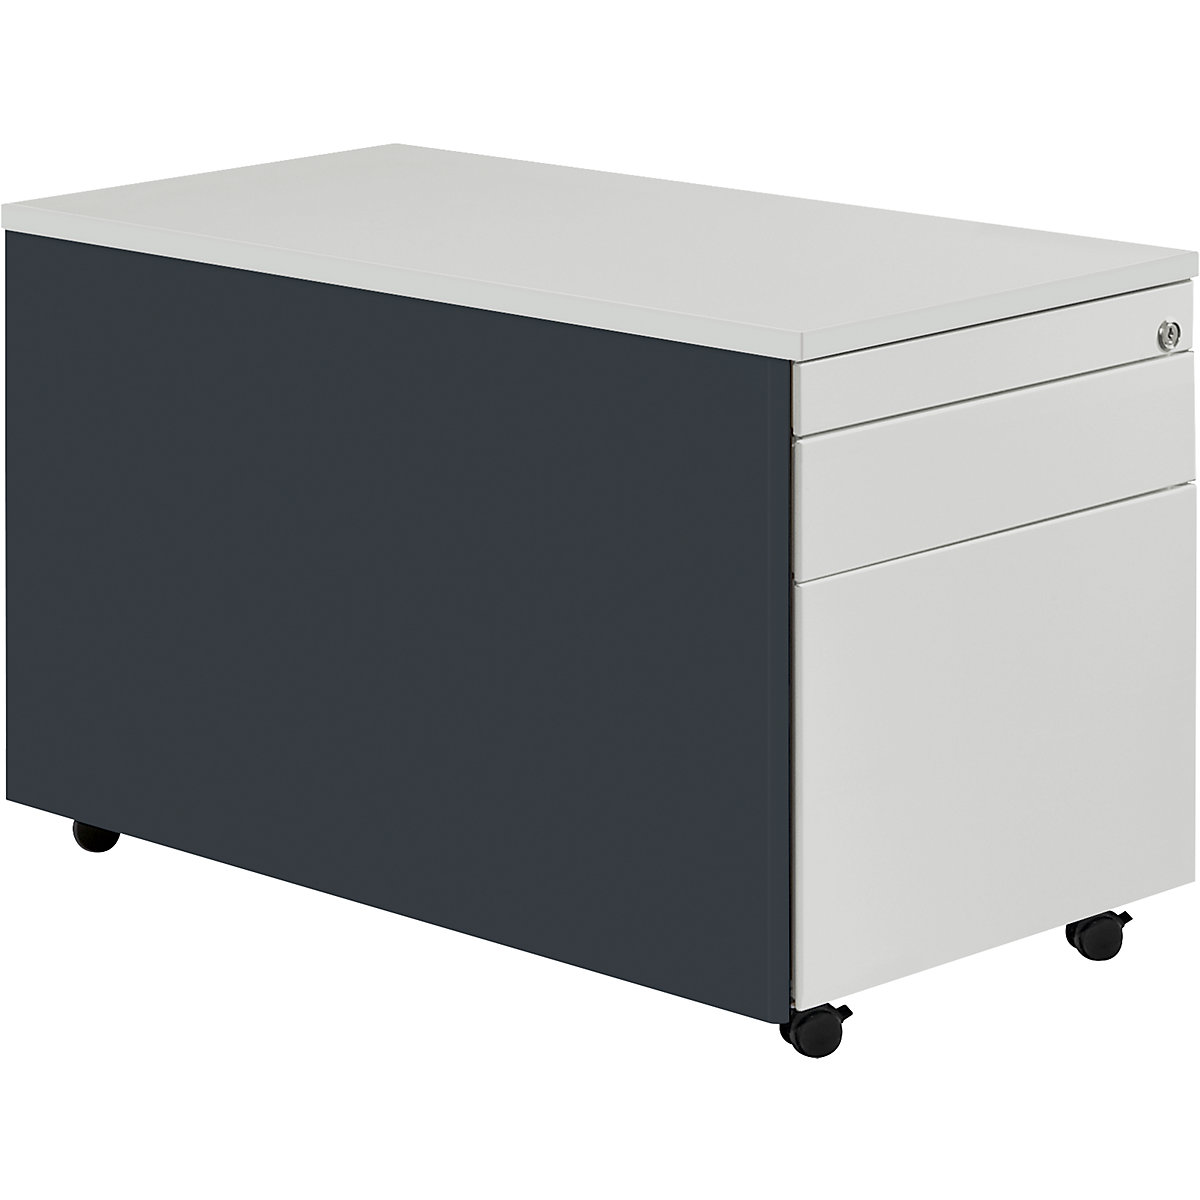 Drawer pedestal with castors – mauser, HxD 529 x 800 mm, 1 drawer, 1 suspension file drawer, charcoal / light grey / light grey-6